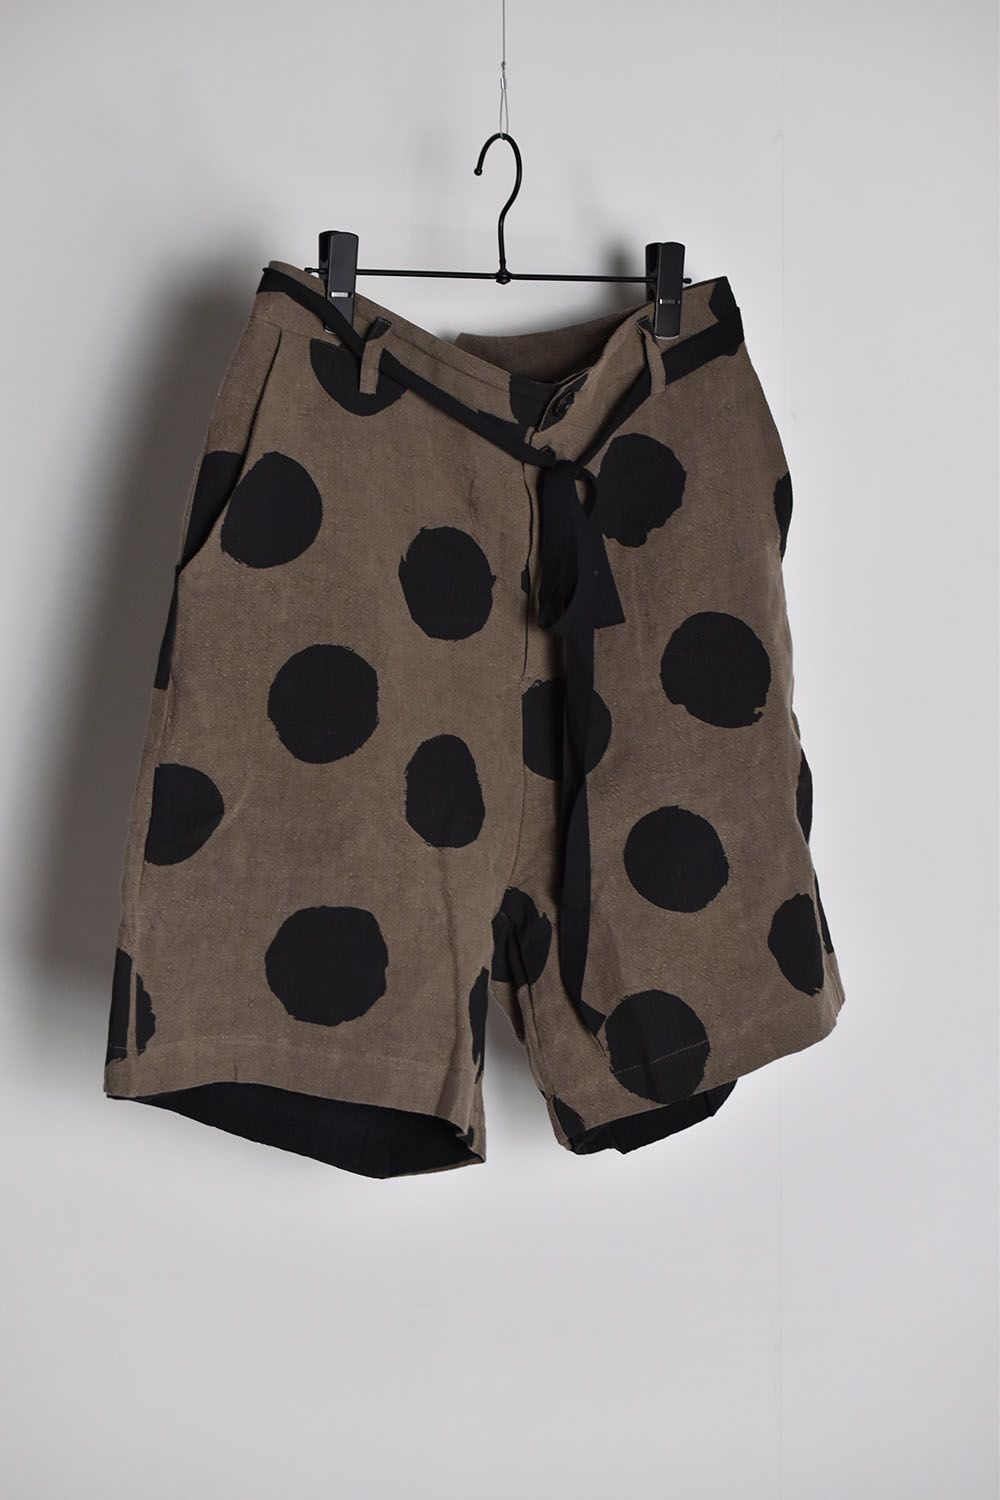 Dots Linen Shorts"Brown,Black"/ドットリネンショーツ"ブラウン,ブラック"